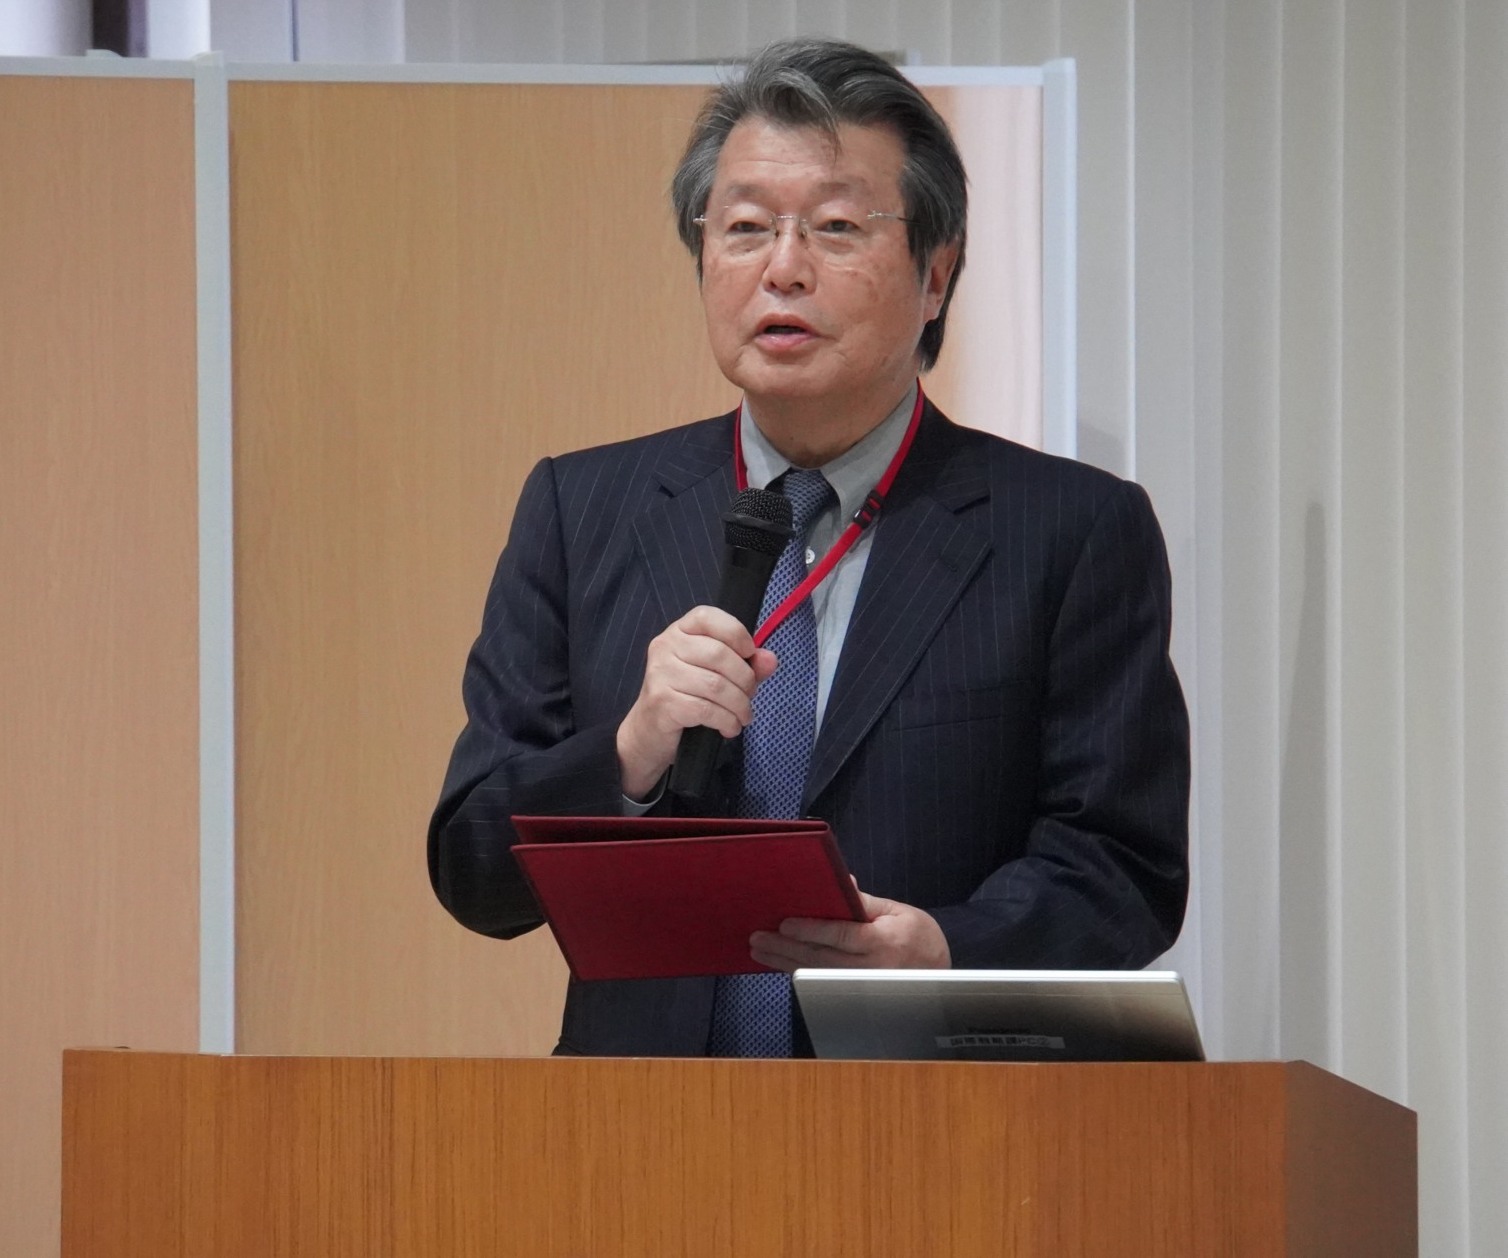 President Tatsuro Ishibashi delivering welcome remark